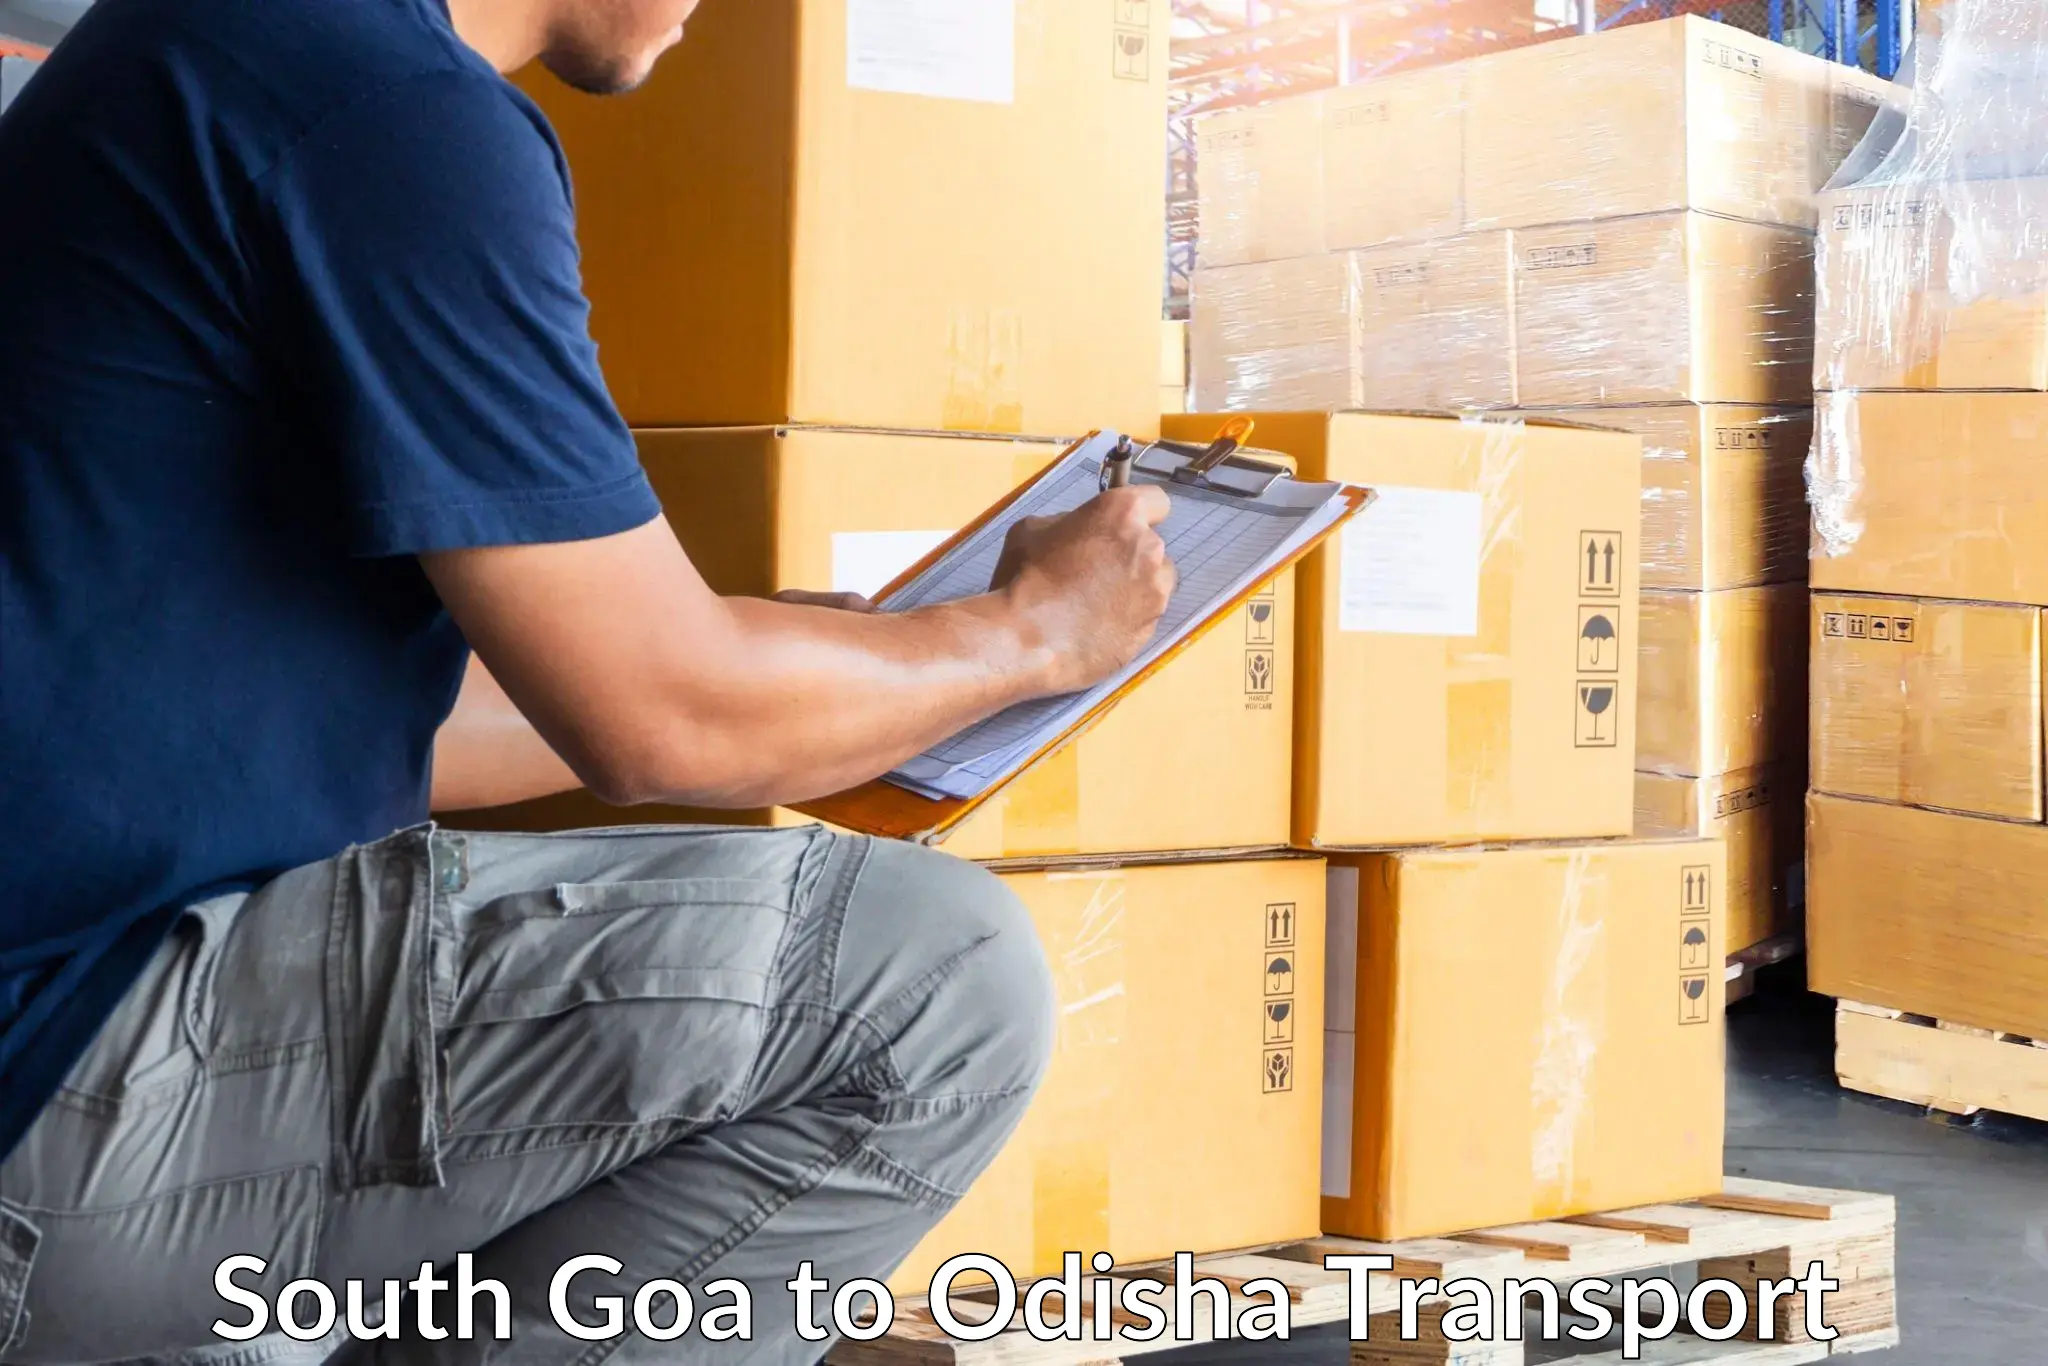 Shipping partner South Goa to Dandisahi